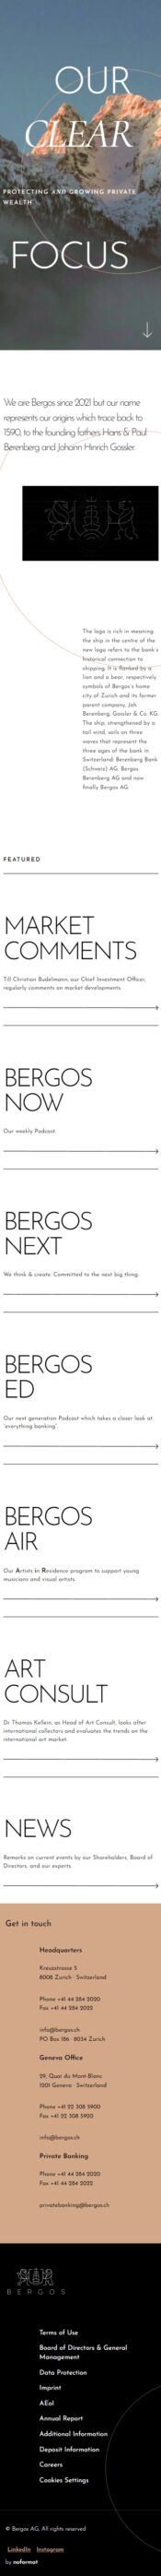 Bergos business clean